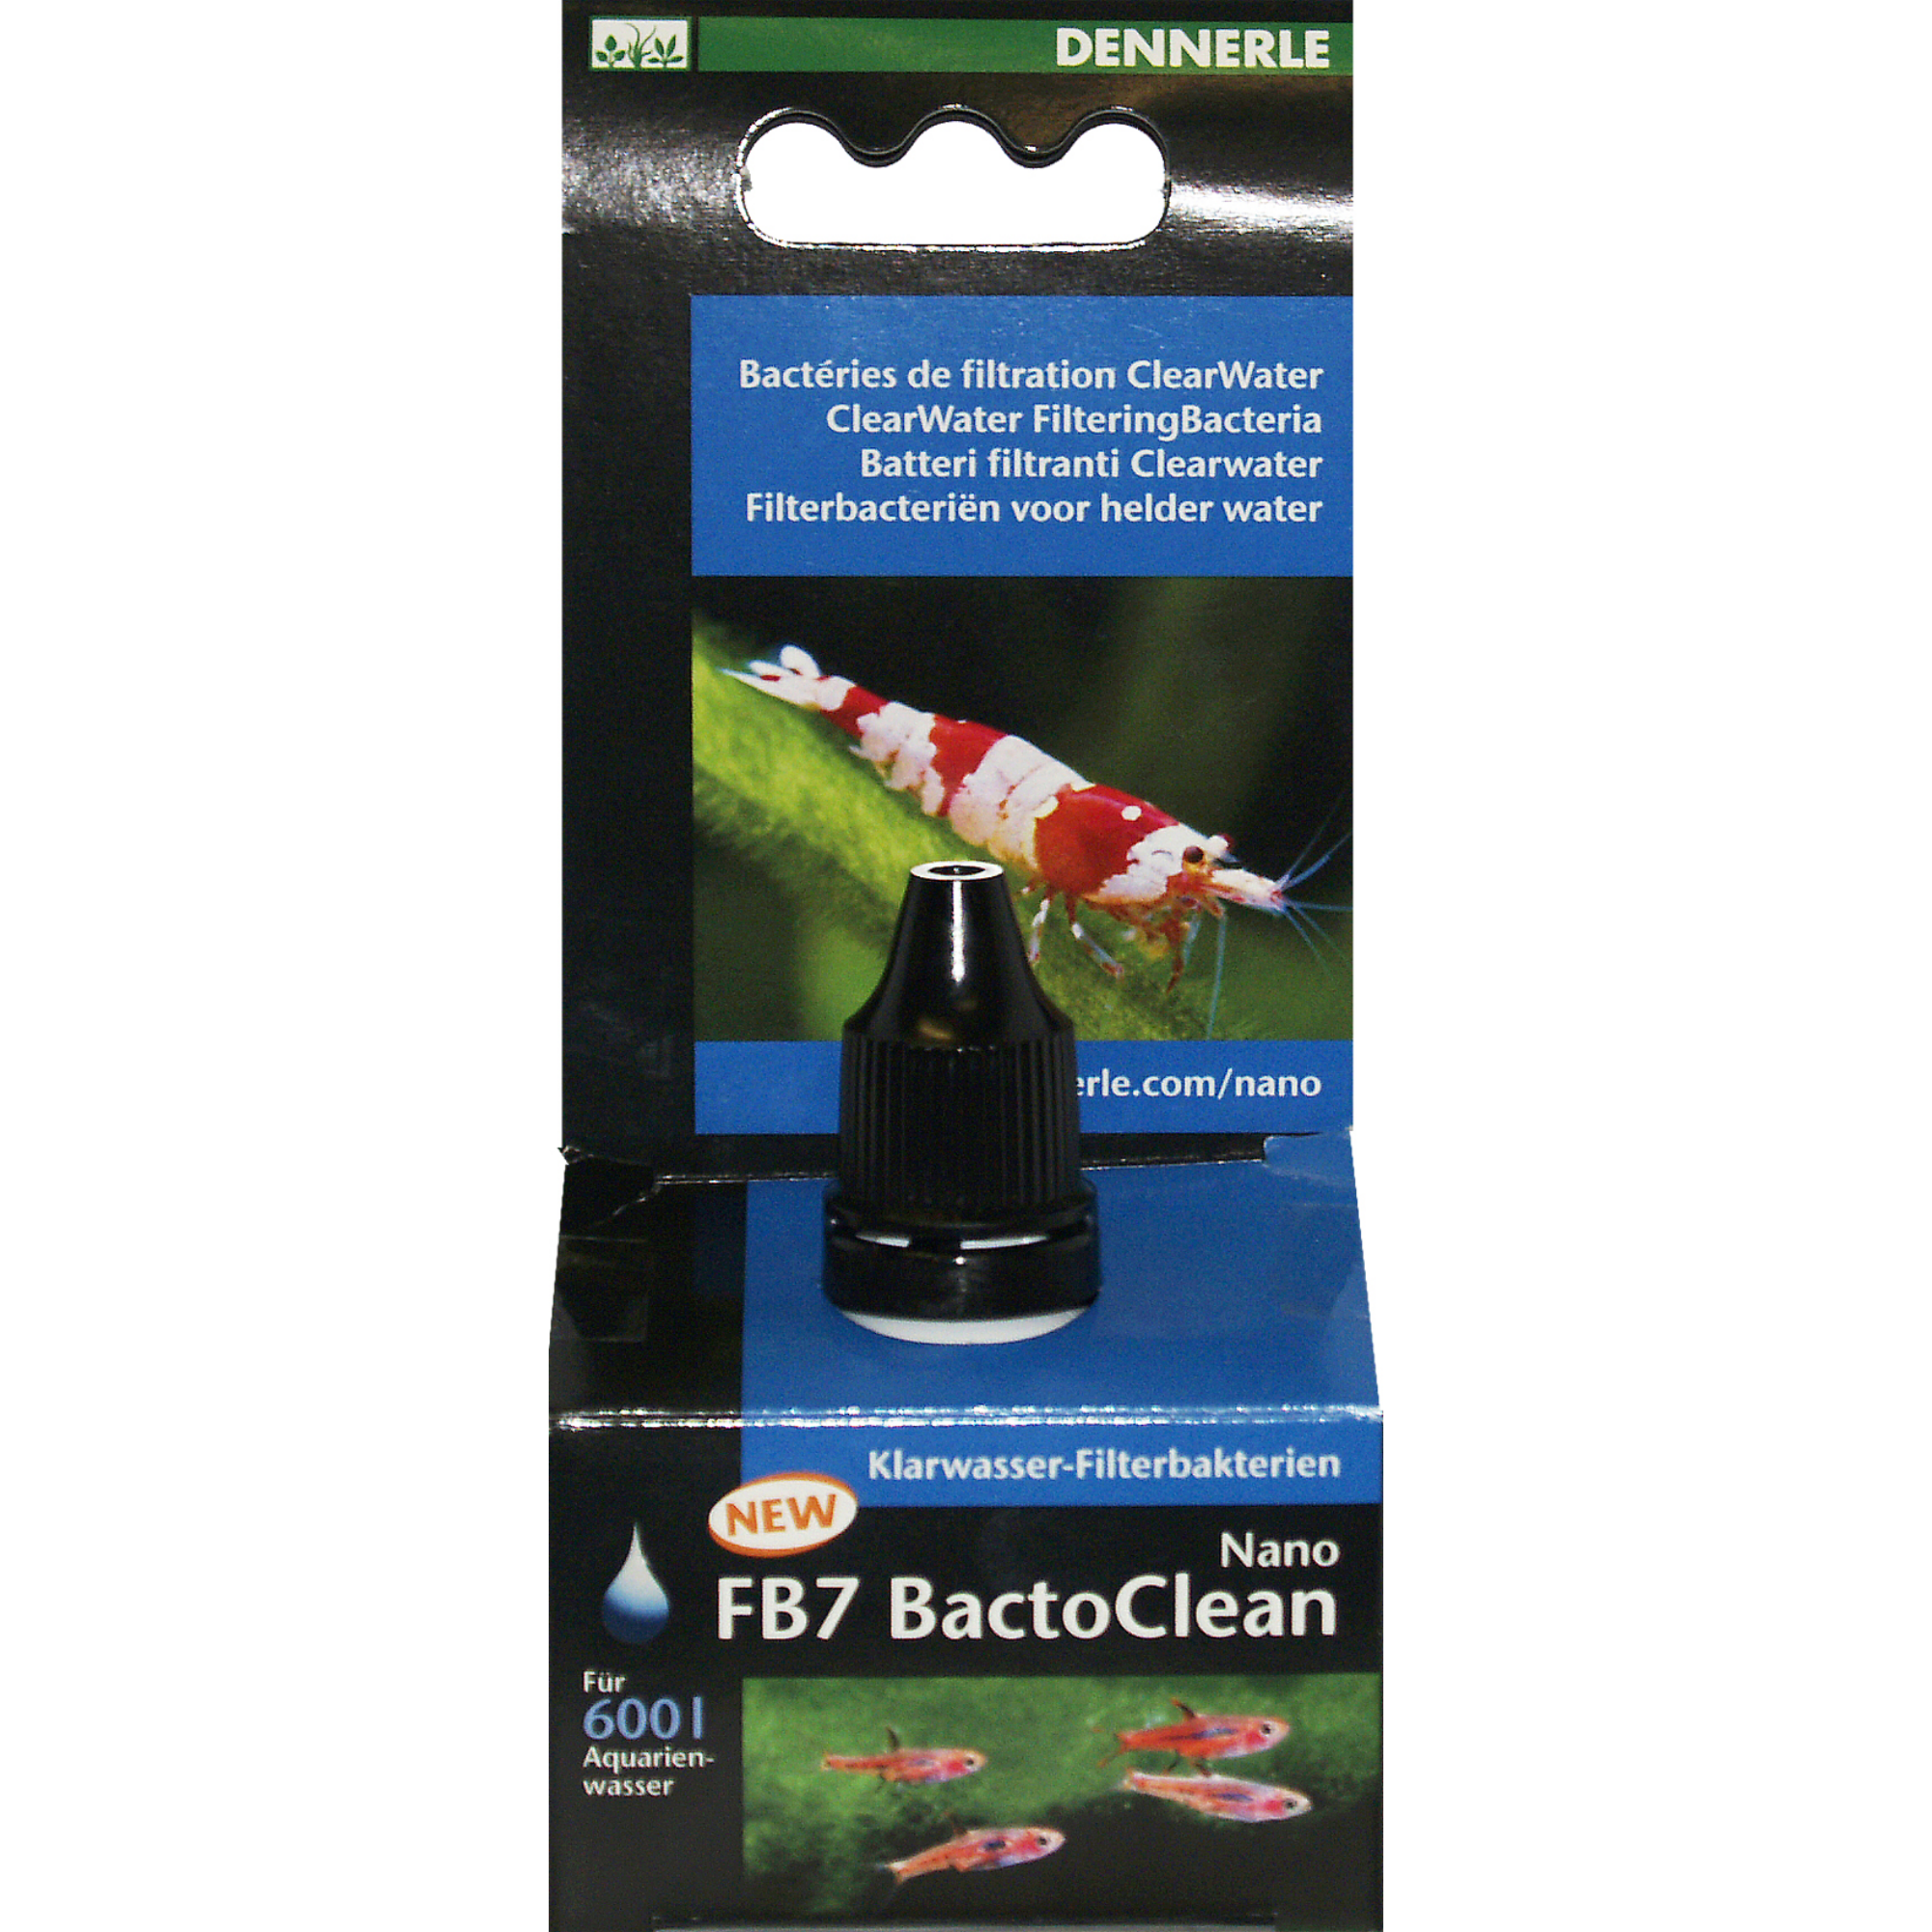 Klarwasser-Filterbakterien "Nano" FB7 BactoClean 15 ml + product picture